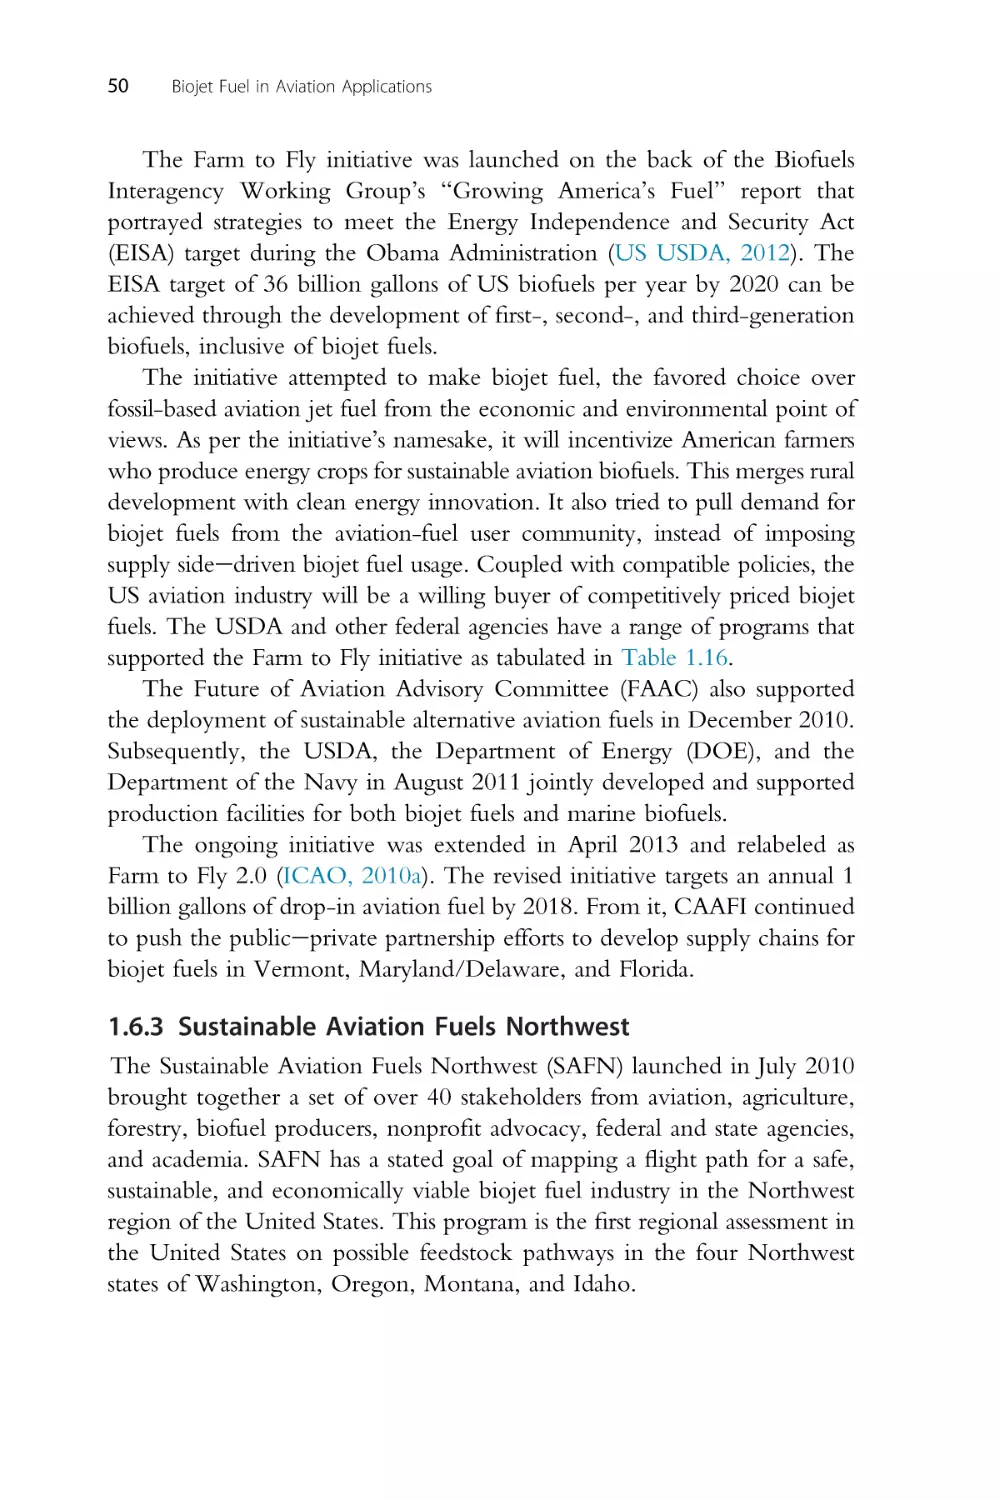 1.6.3 Sustainable Aviation Fuels Northwest